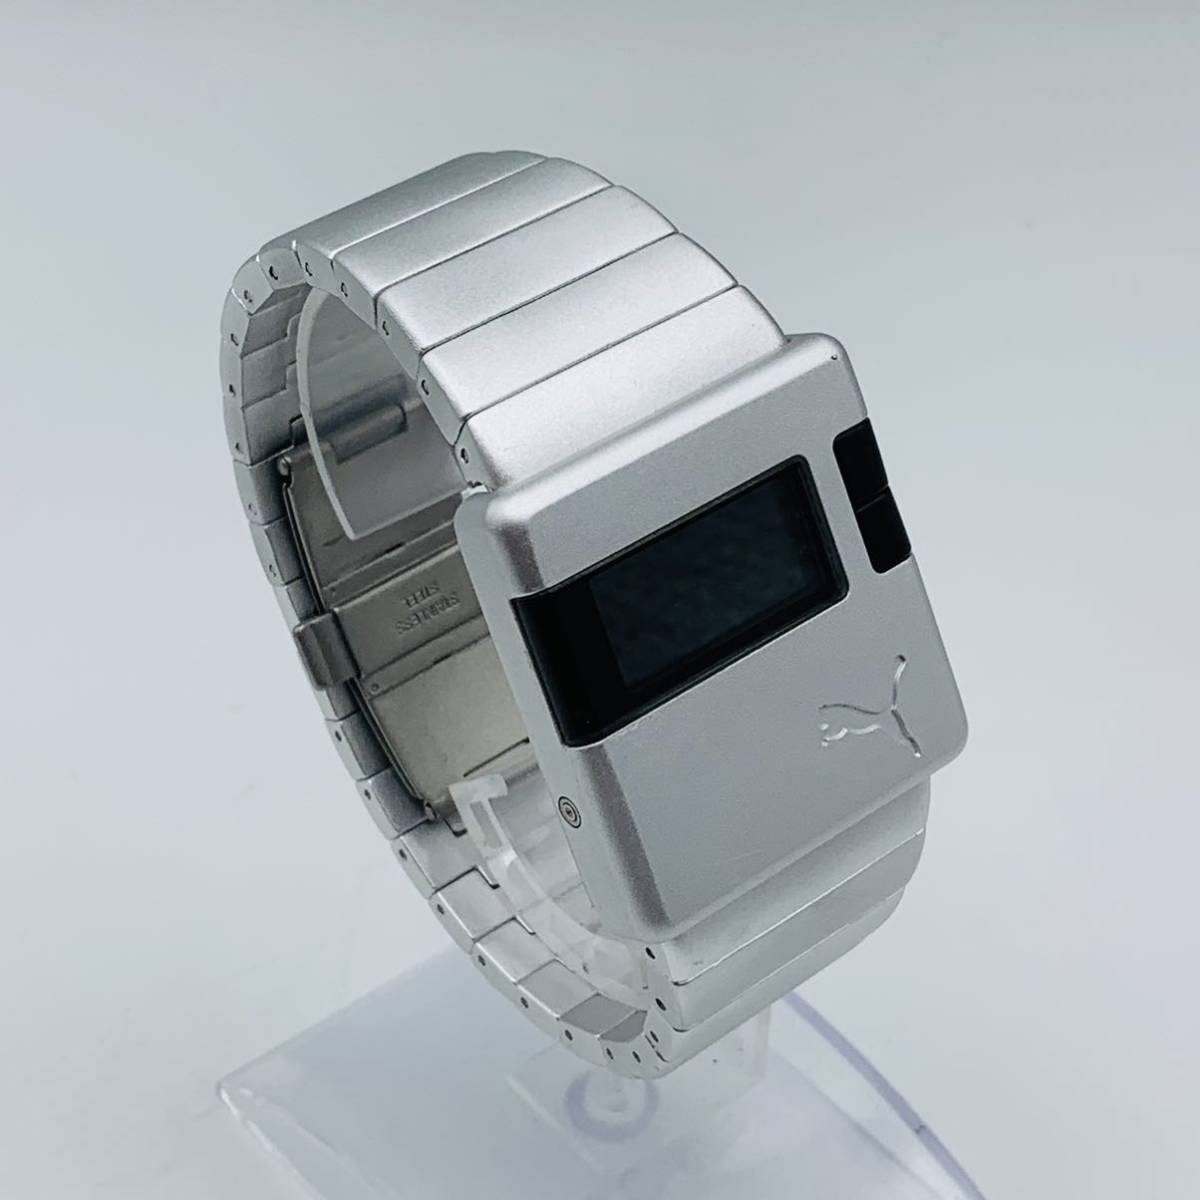 77 PUMA SIRIUS プーマ シリウス メンズ腕時計 腕時計 時計 デジタル時計 クオーツ クォーツ スポーツウォッチ ステンレススチール TI_画像2